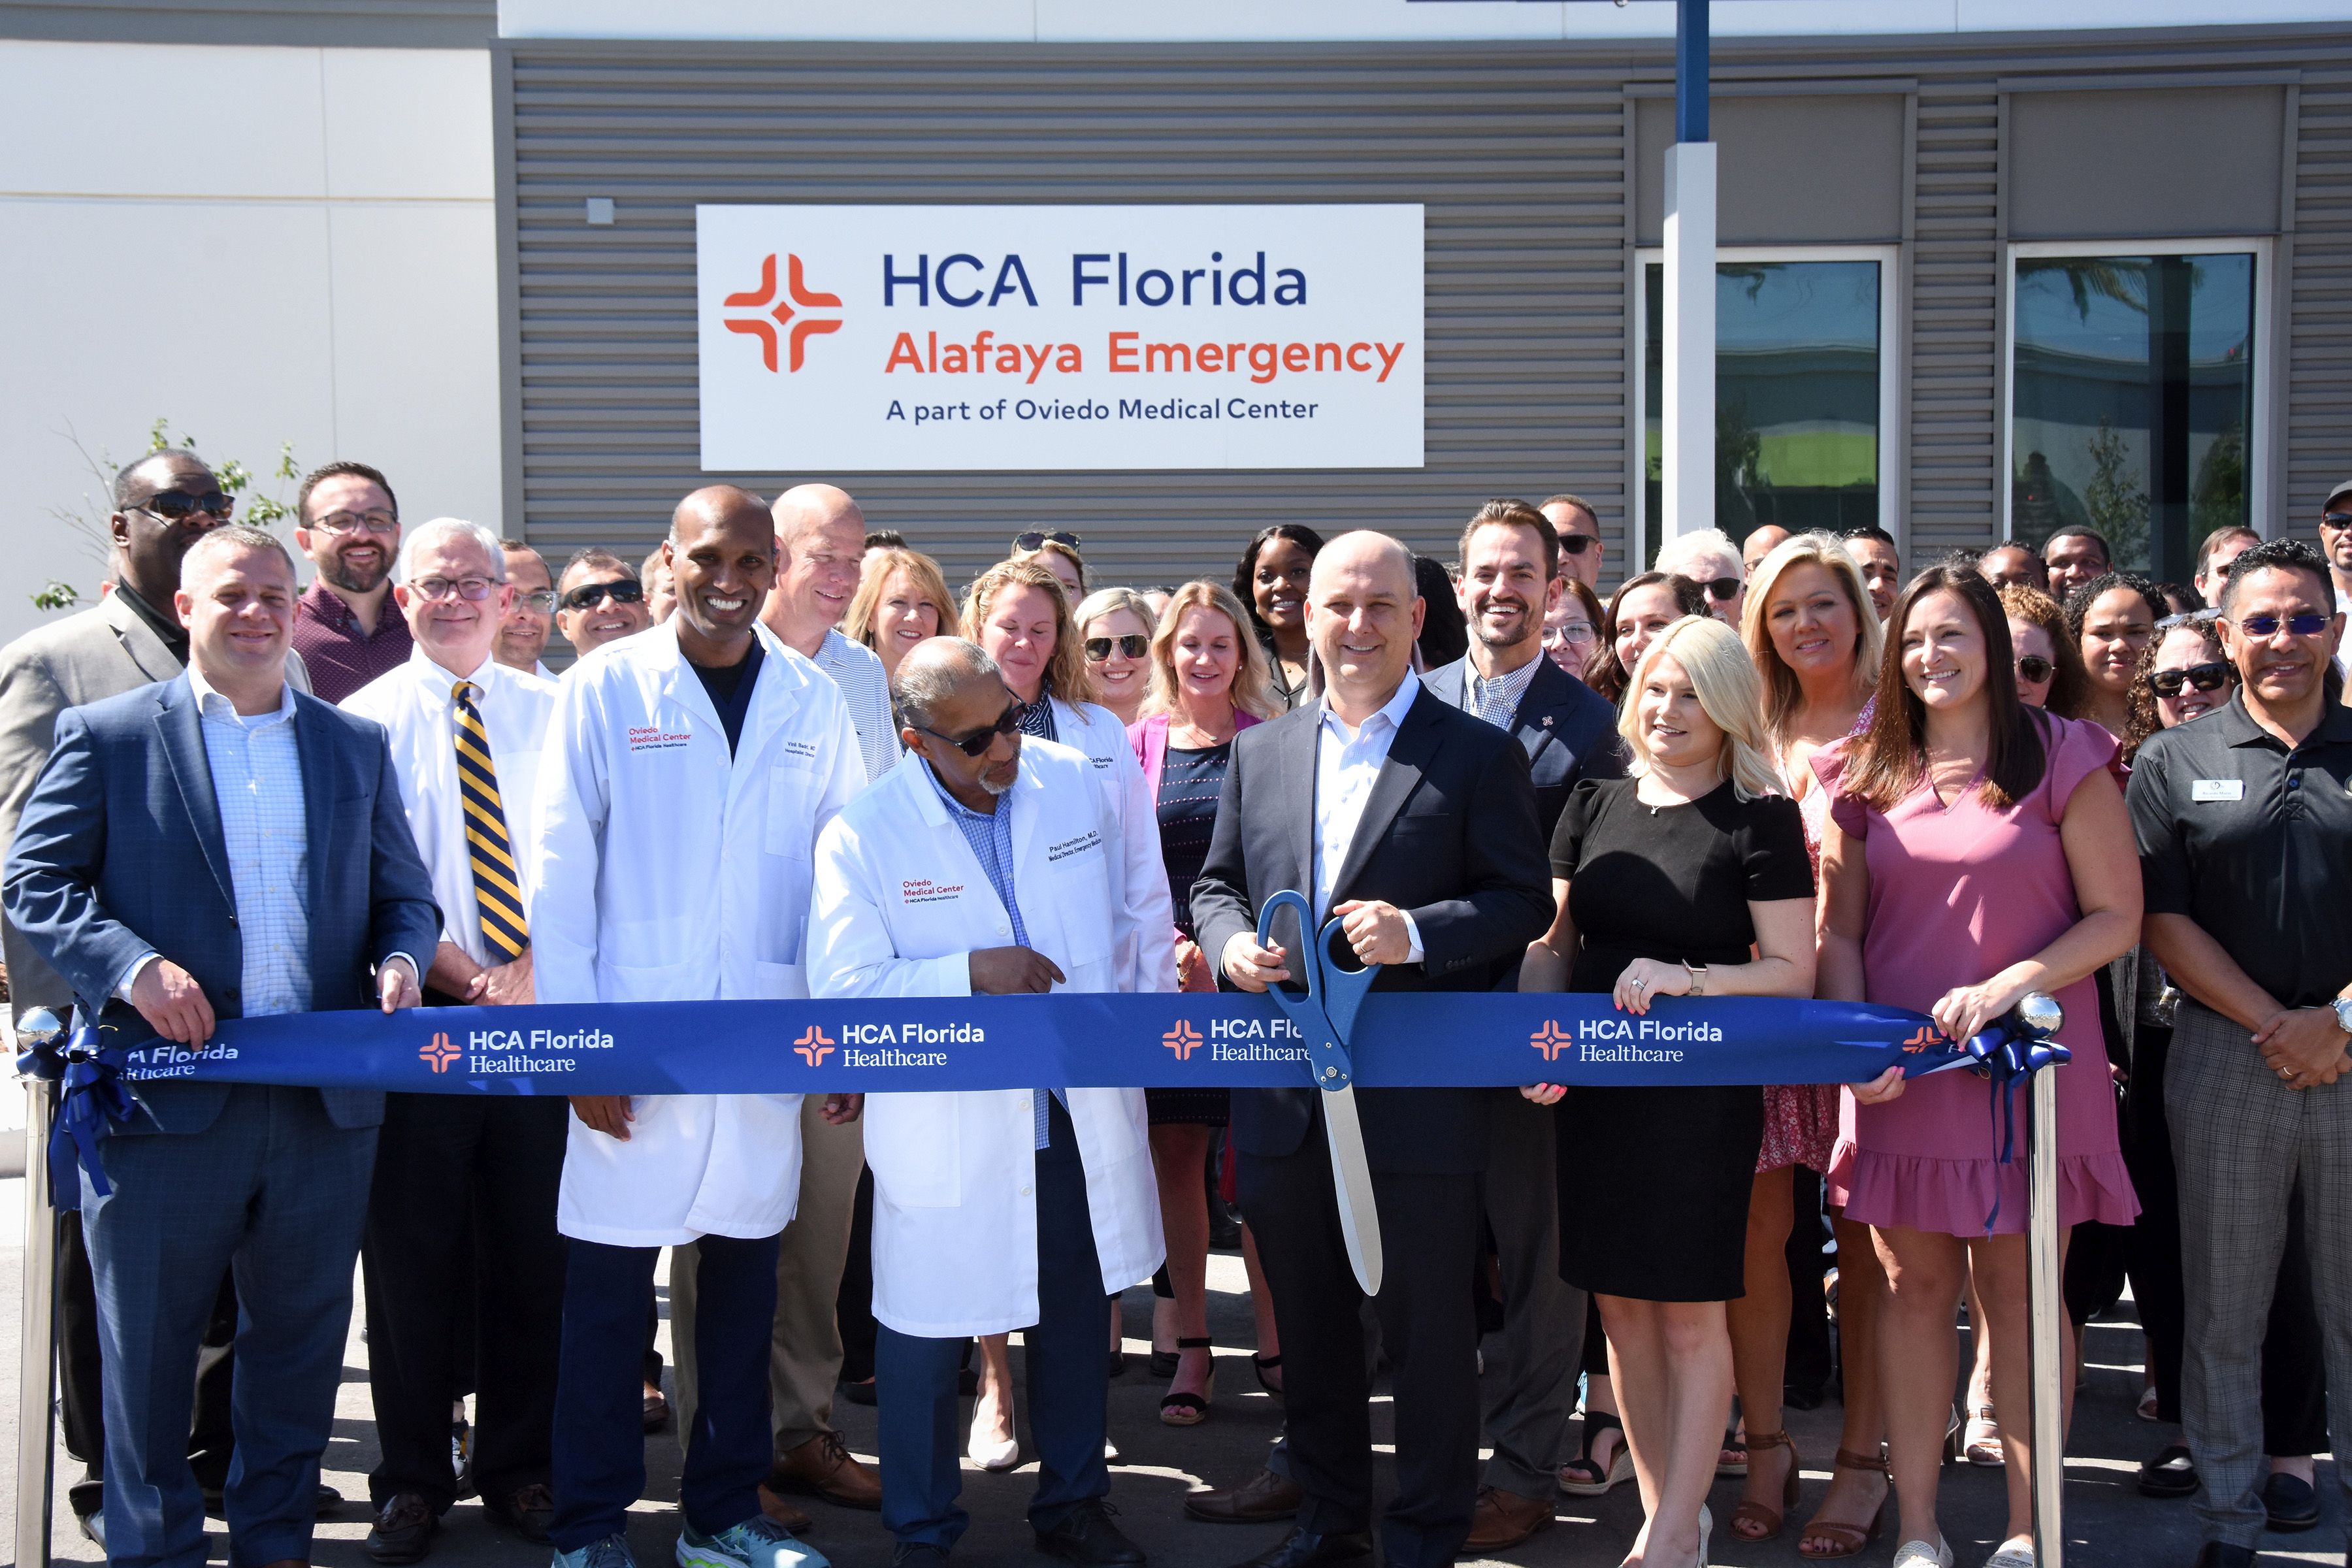 Colleagues outside new HCA Florida Alafaya Emergency facility for ribbon cutting.